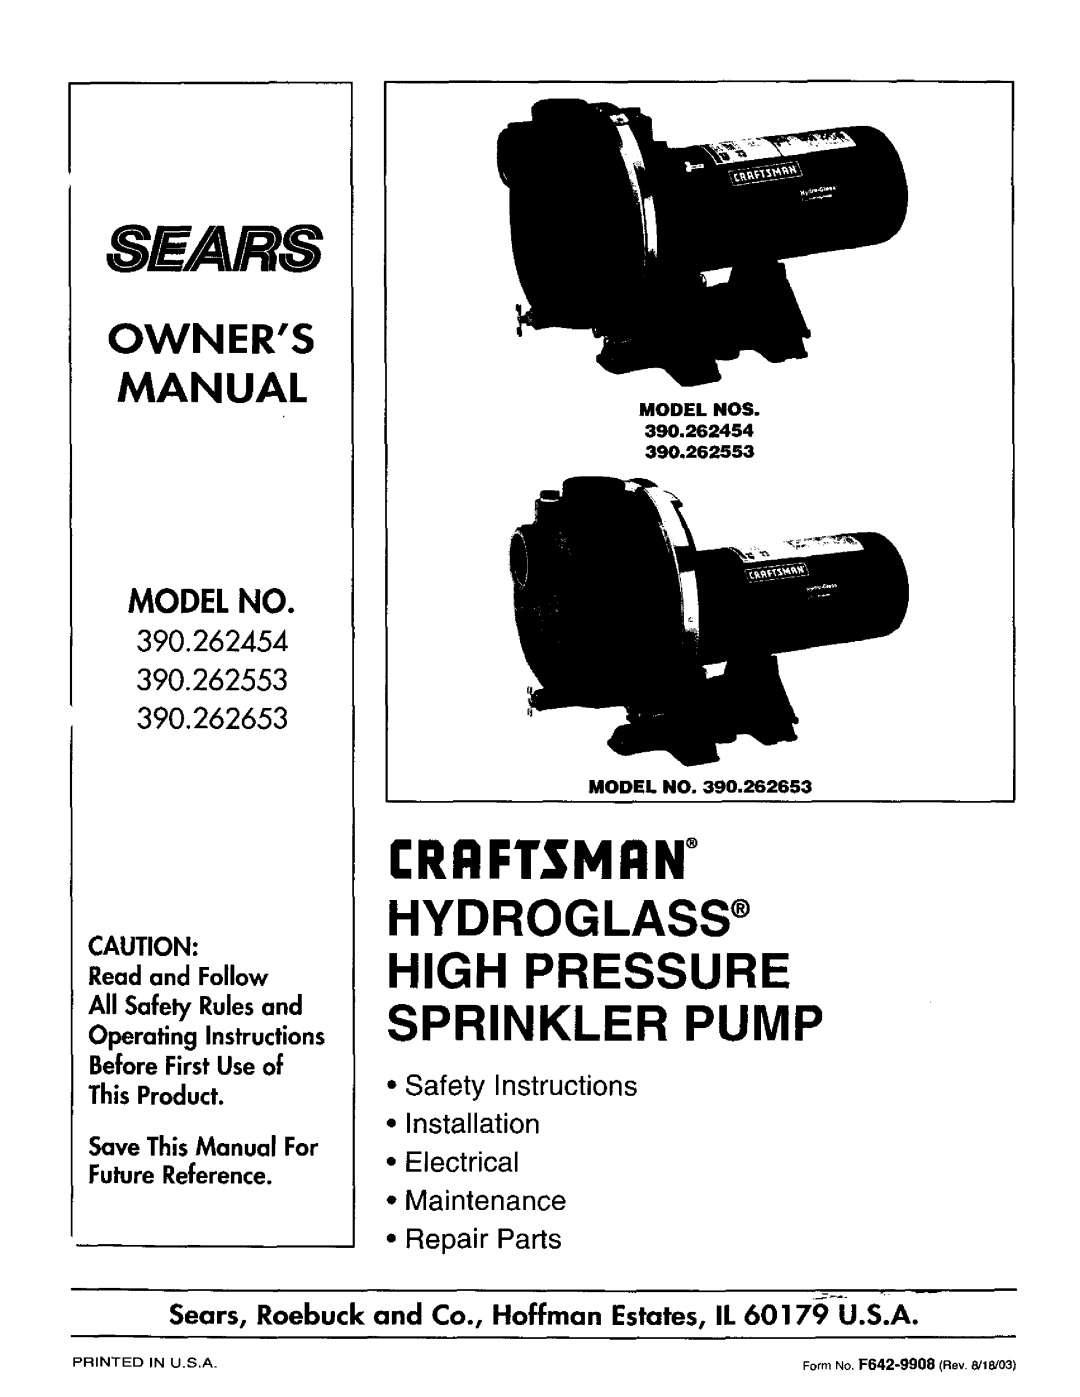 Craftsman 390.262454 owner manual Sears, IRIIFrSMg N, Hydroglass High Pressure, Sprinkler Pump, Installation, Modelno 